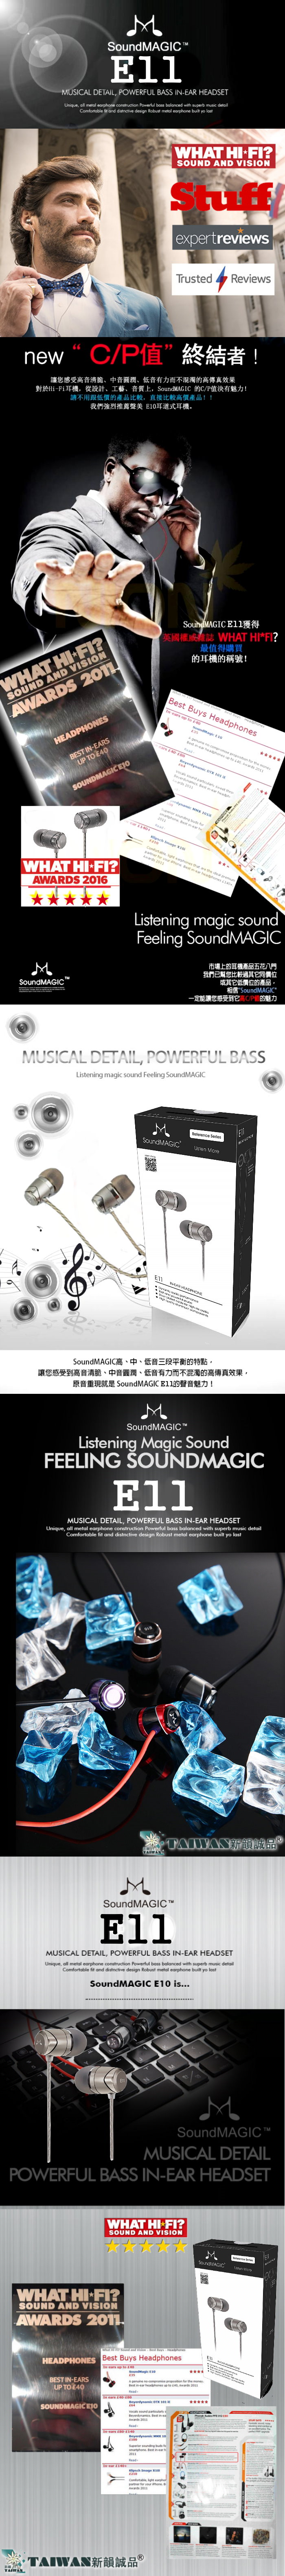 soundmagic e10c 千元以內平價耳機推薦 聲美e11 耳罩、耳道式任你挑,耳機推薦,聲美耳機,cp值耳機E10,soundmagic E11C 線控麥克風耳機